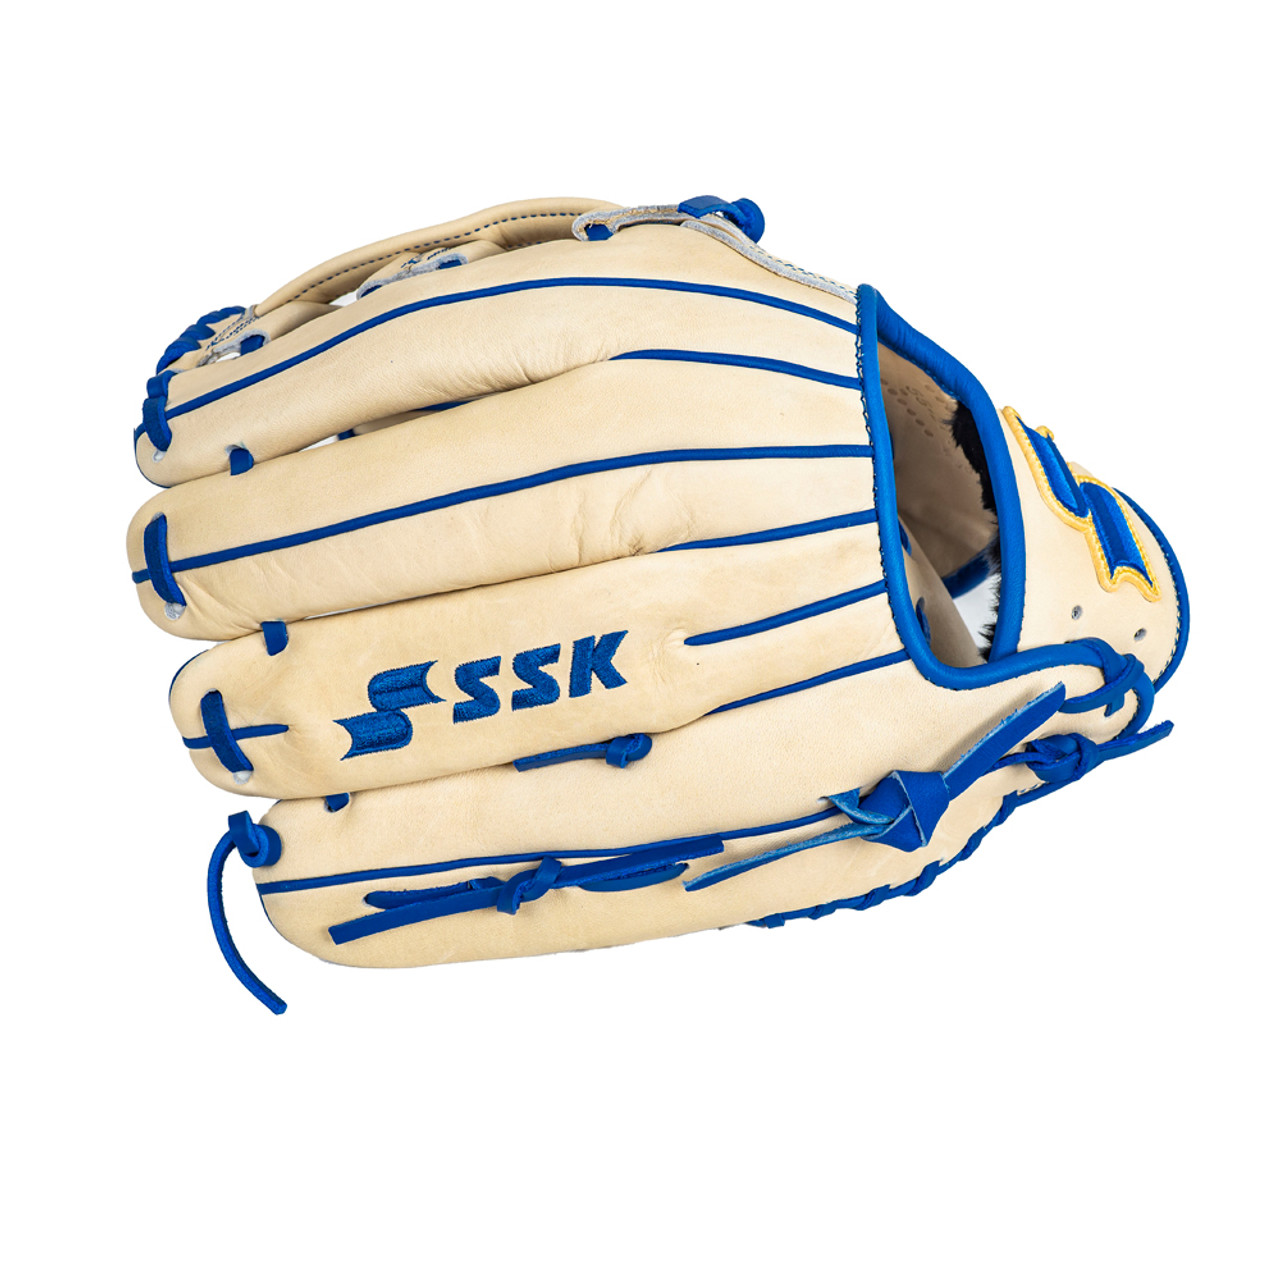 SSK Z7 Specialist 12.75 Outfield Baseball Glove Z7-1275TANBLK3